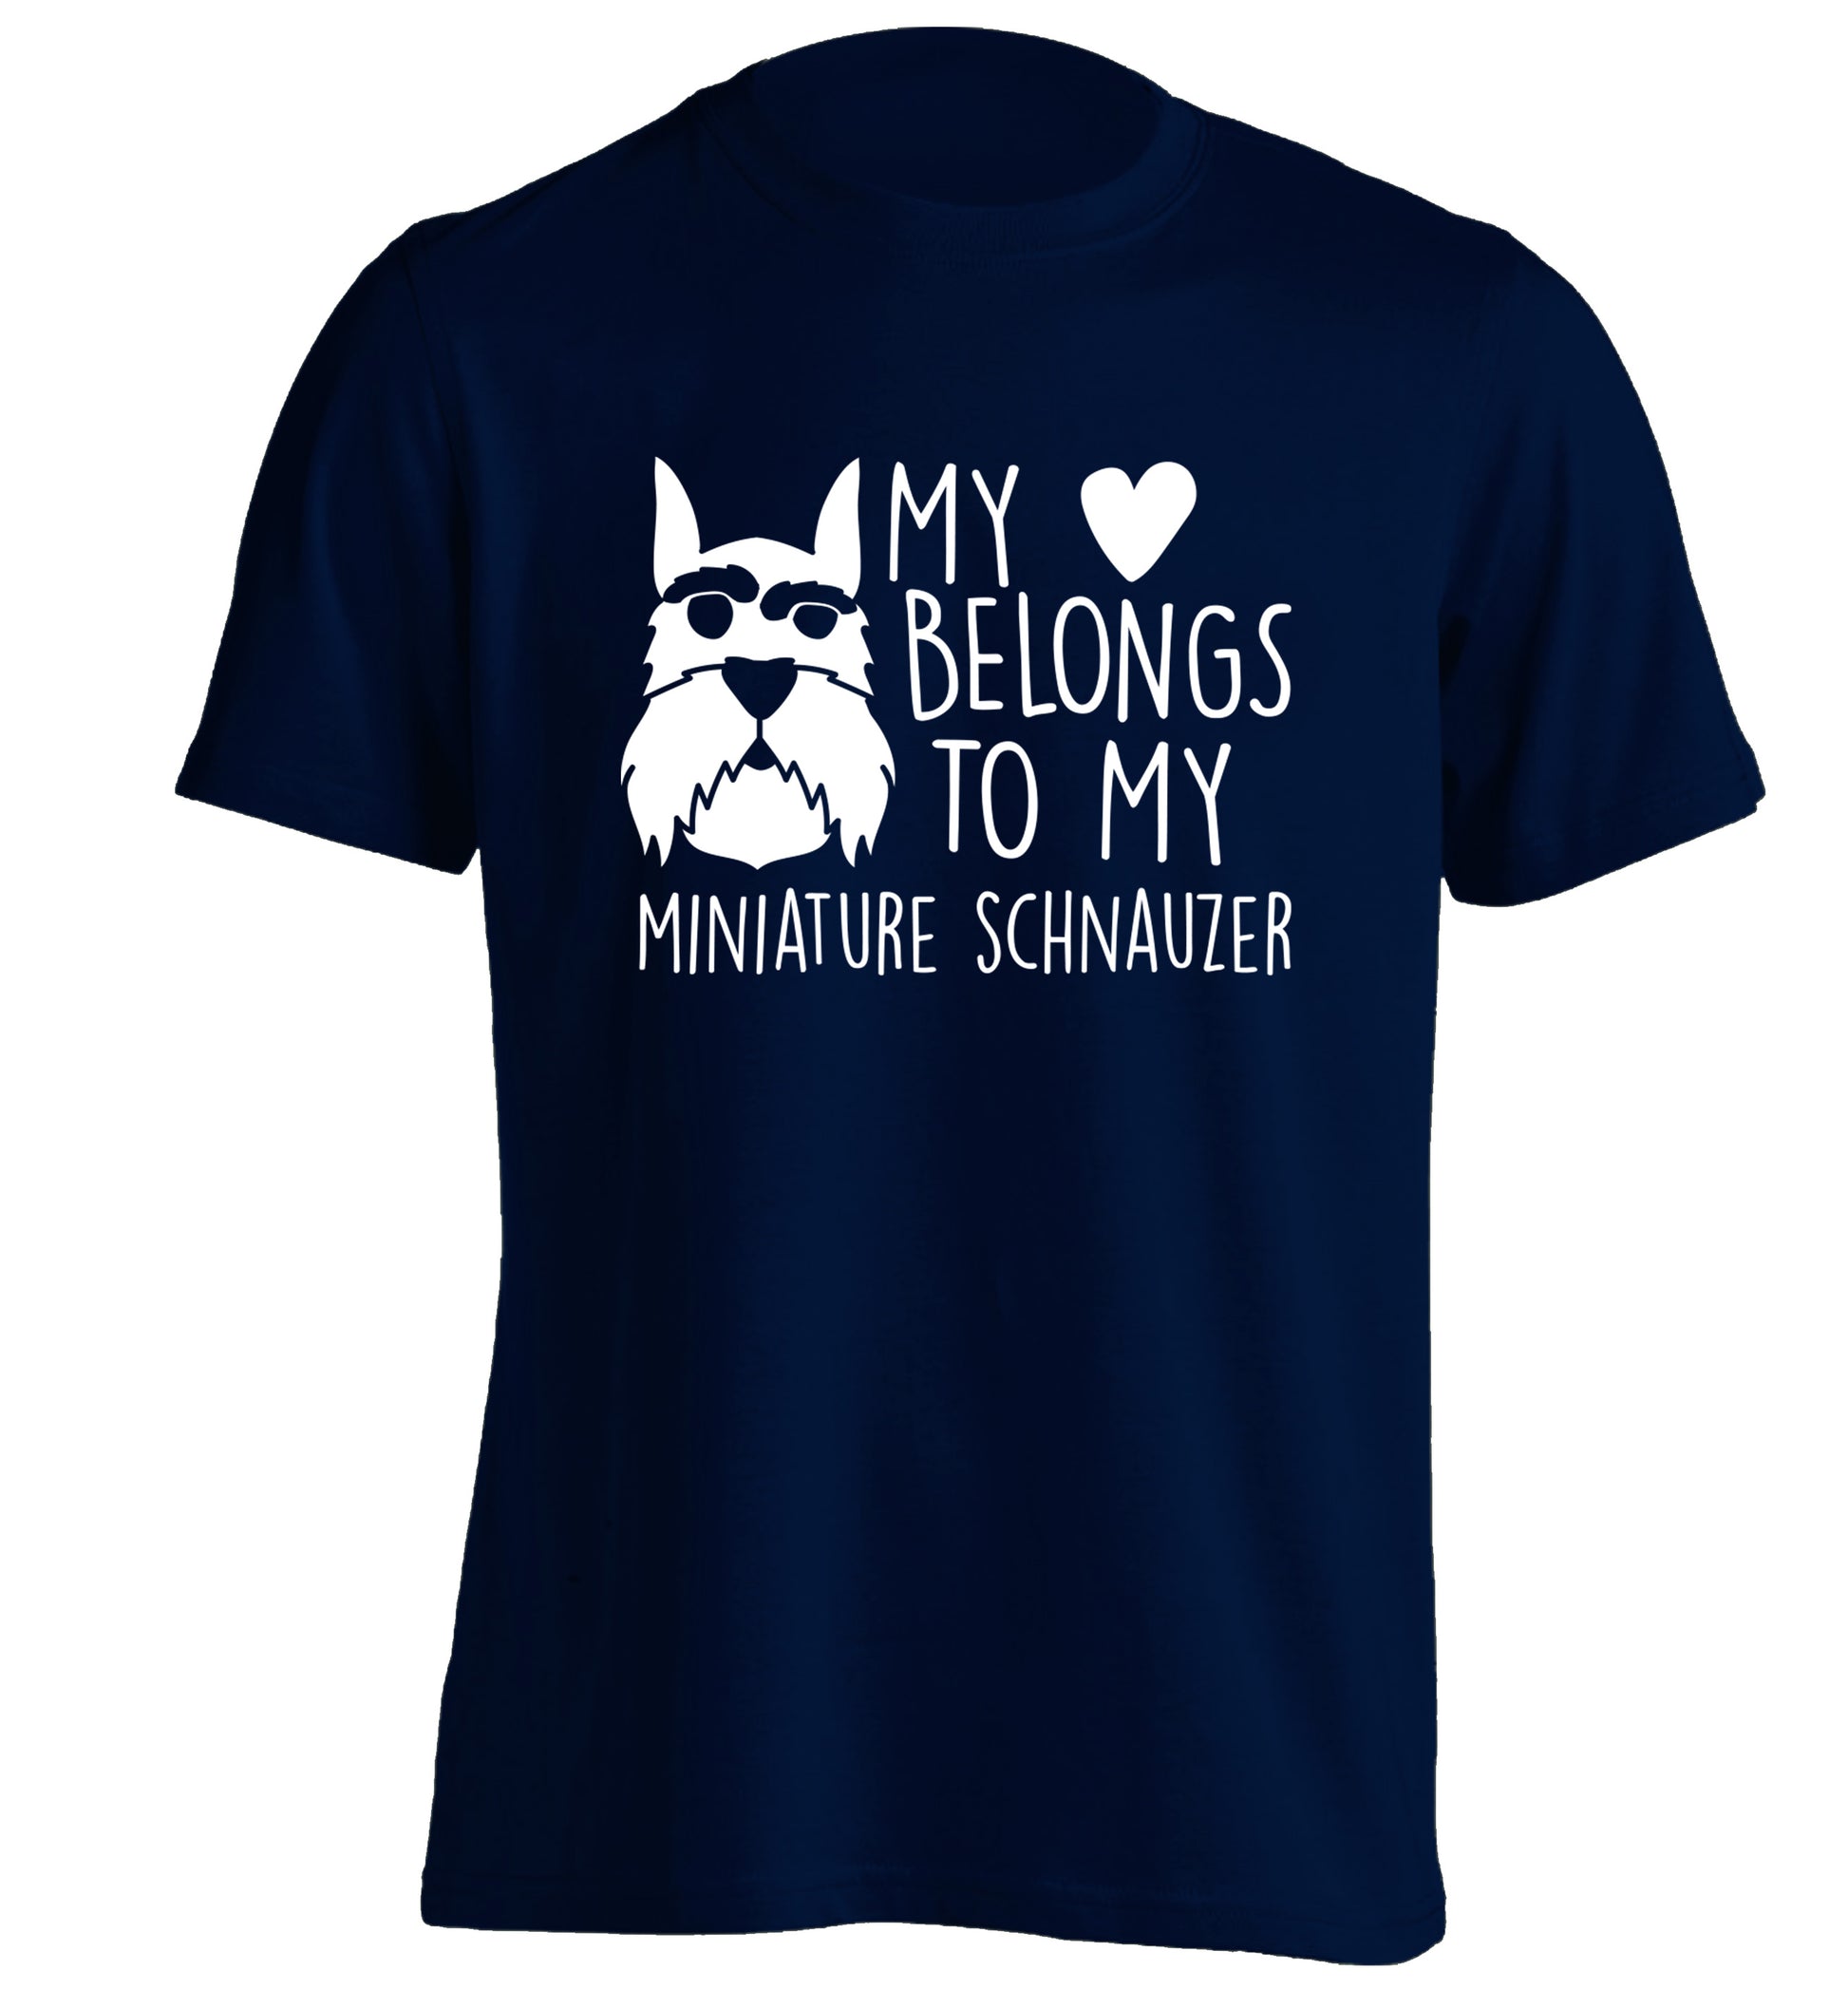 My heart belongs to my miniature schnauzer adults unisex navy Tshirt 2XL